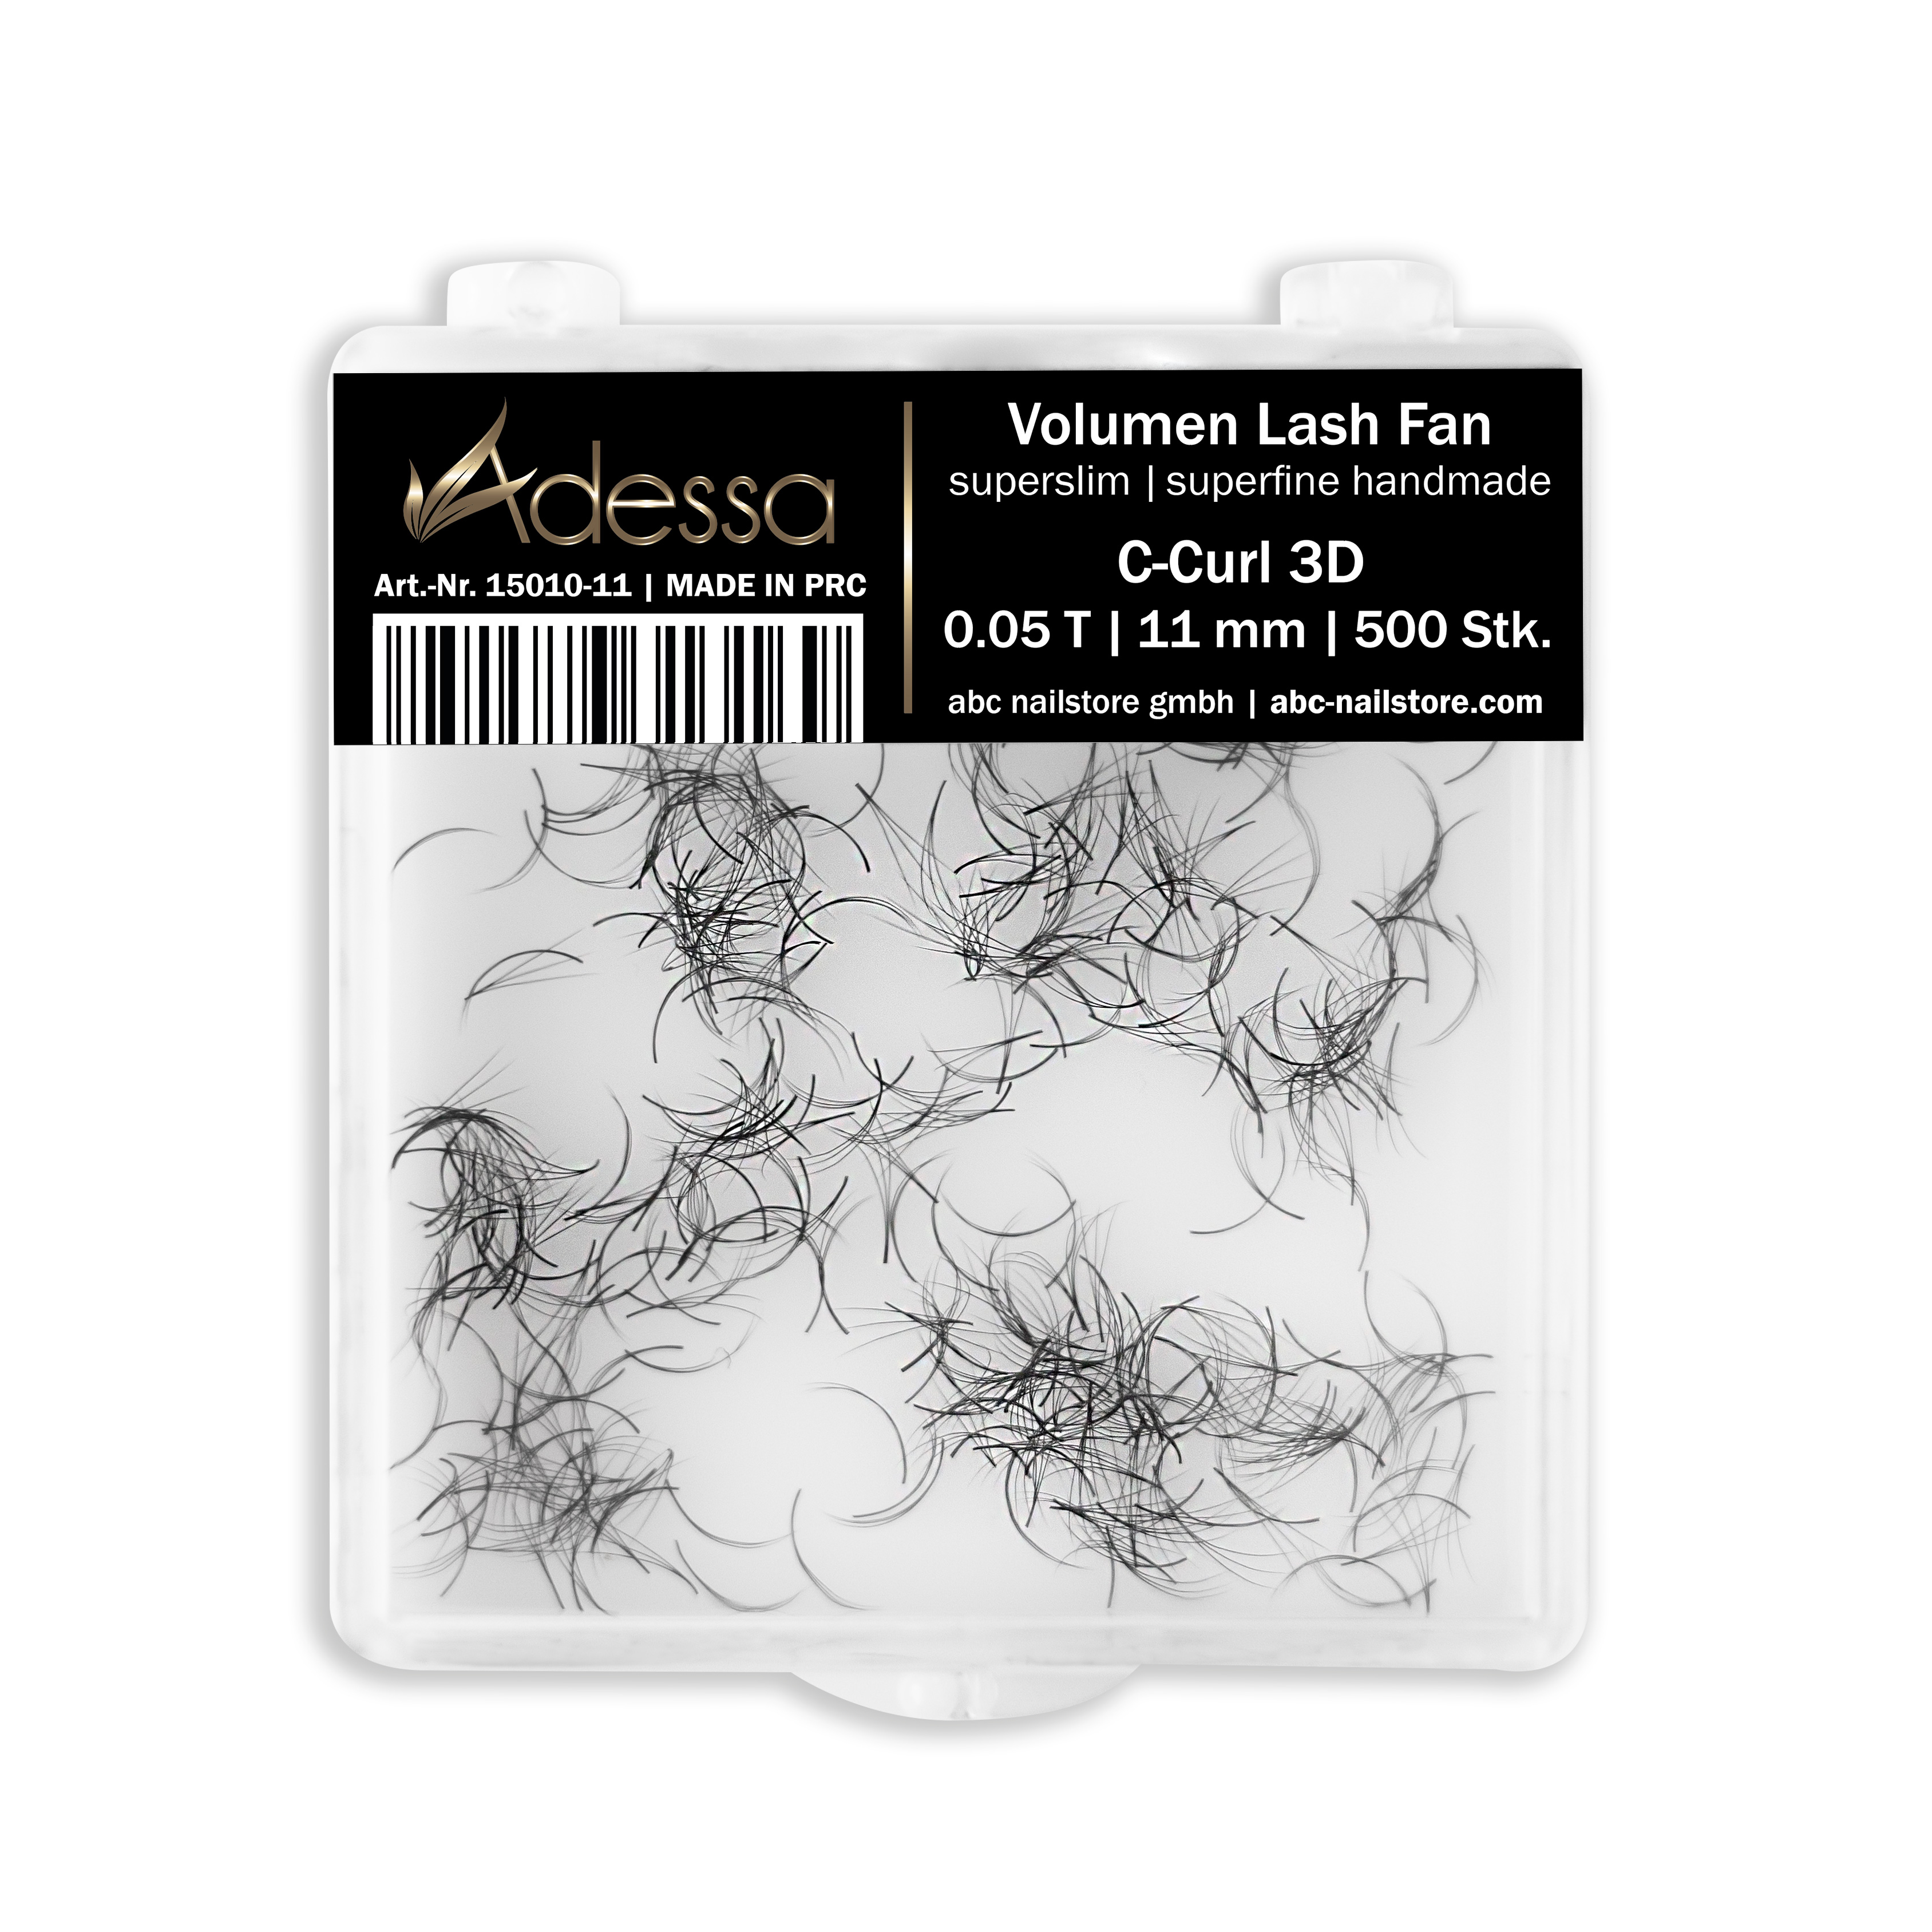 Adessa Volumen Lash Fan, superslim/superfine handmade, C-Curl, 3D, 0.05, 11mm, 500 Stück